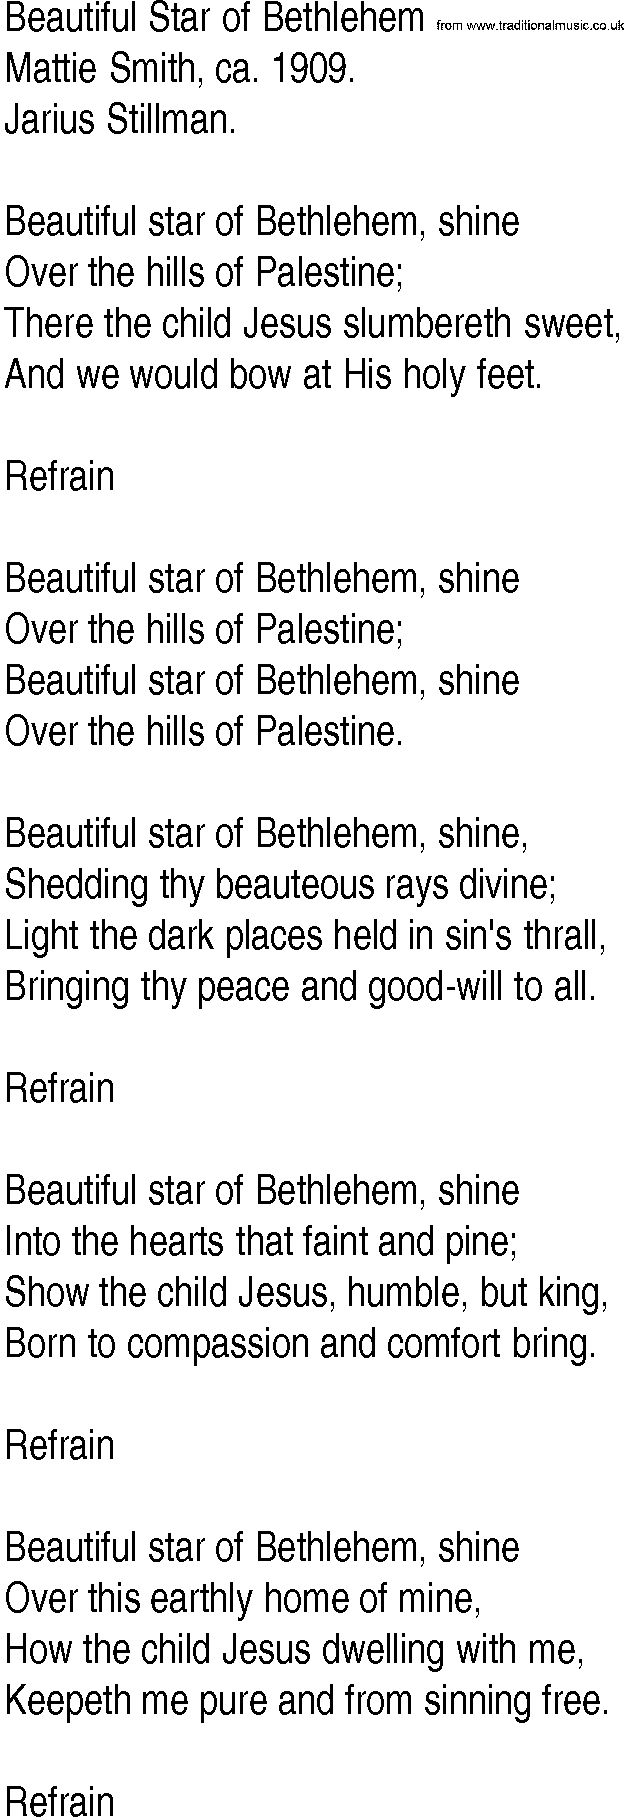 hymn-and-gospel-song-lyrics-for-beautiful-star-of-bethlehem-by-mattie